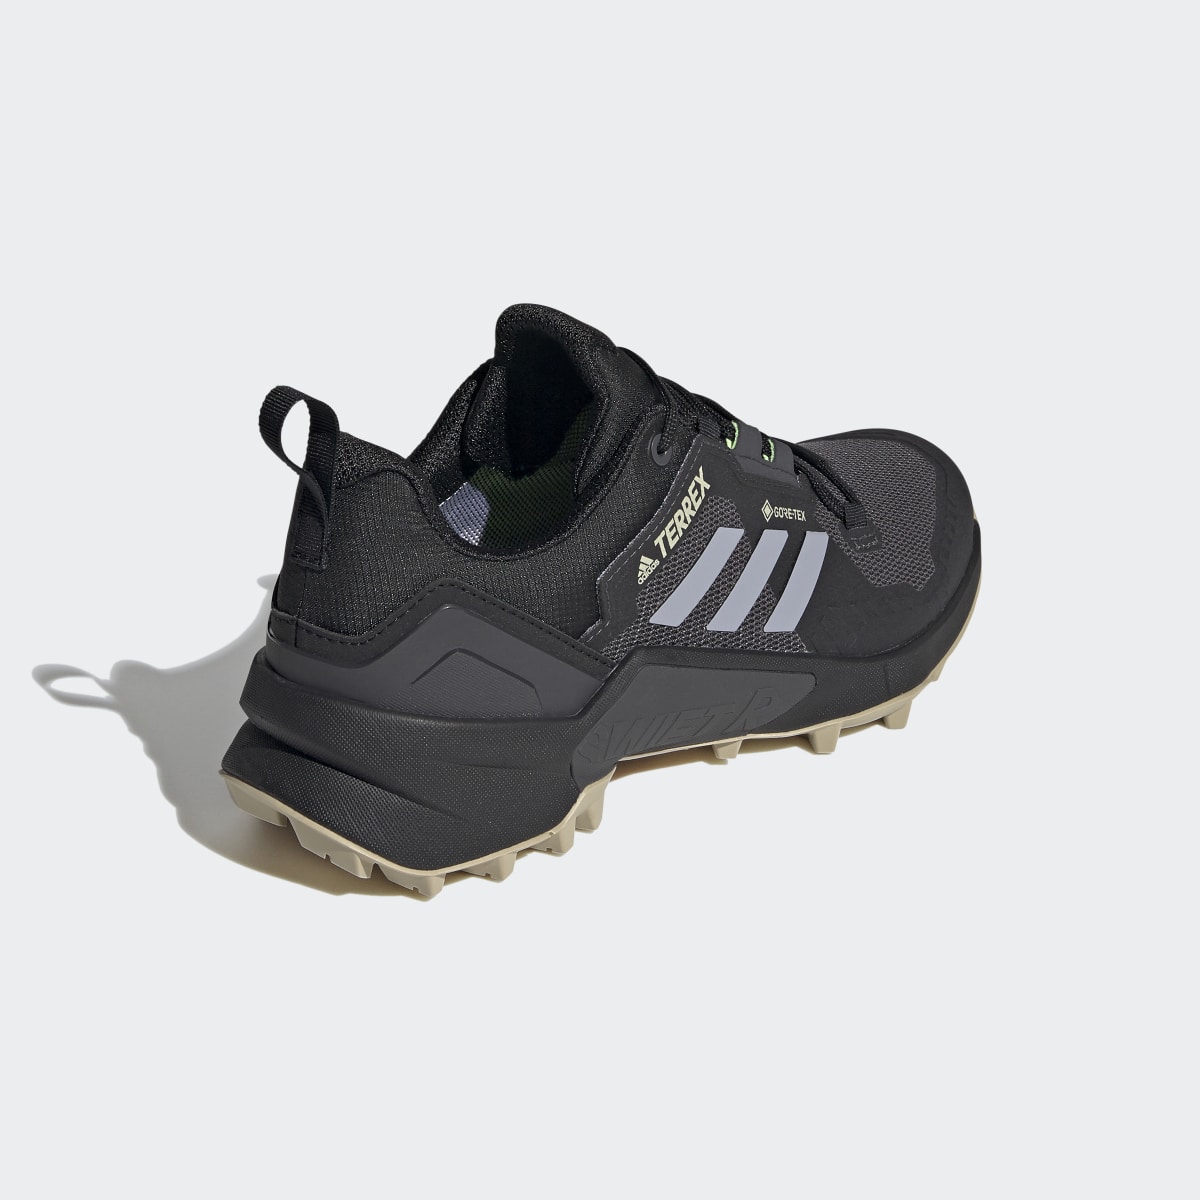 Adidas Chaussure de randonnée Terrex Swift R3 GORE-TEX. 6